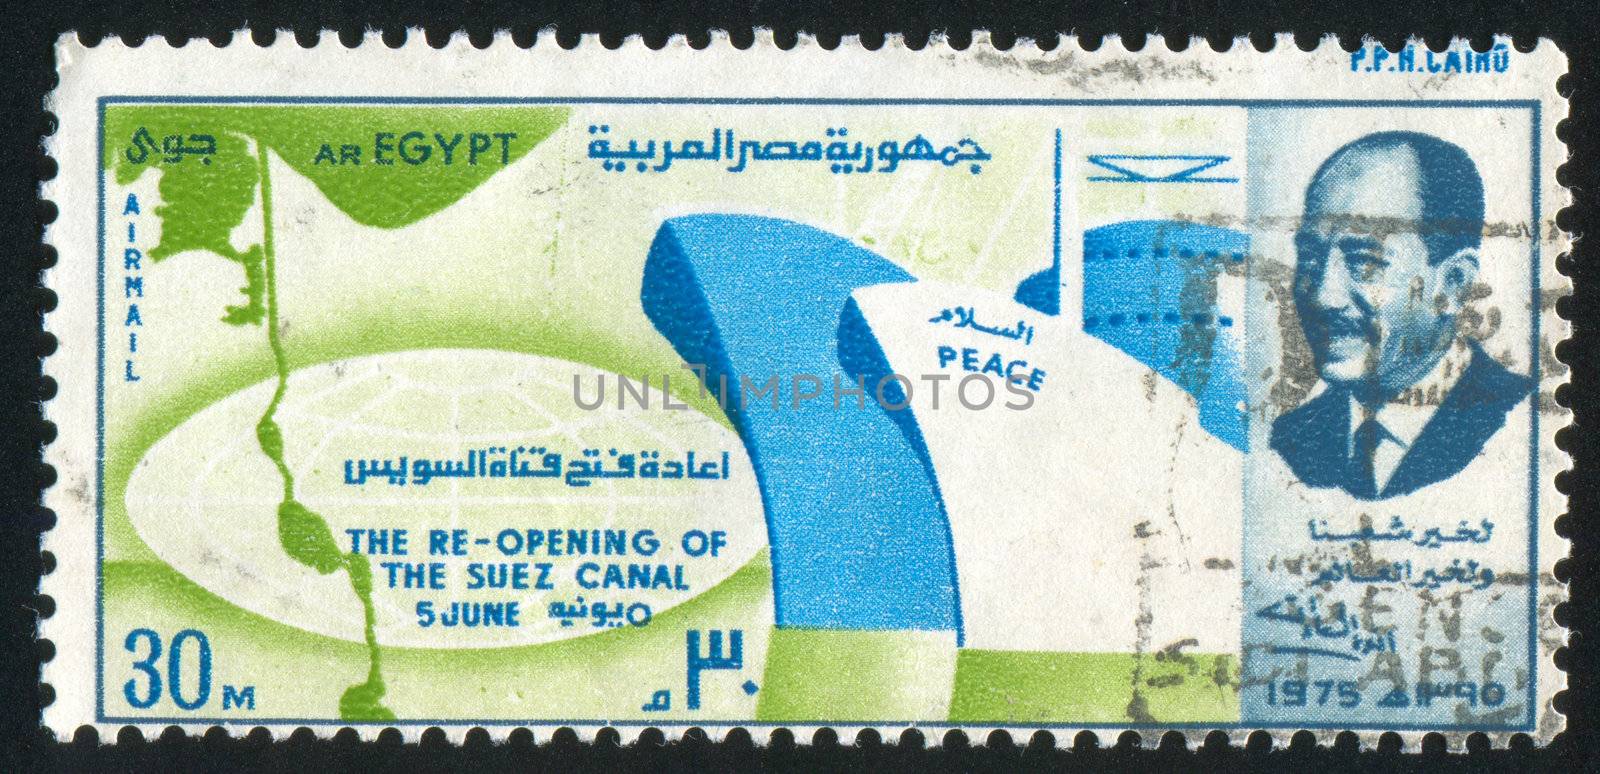 EGYPT - CIRCA 1975: stamp printed by Egypt, shows Suez Canal, Globe, Ships, President Sadat, circa 1975